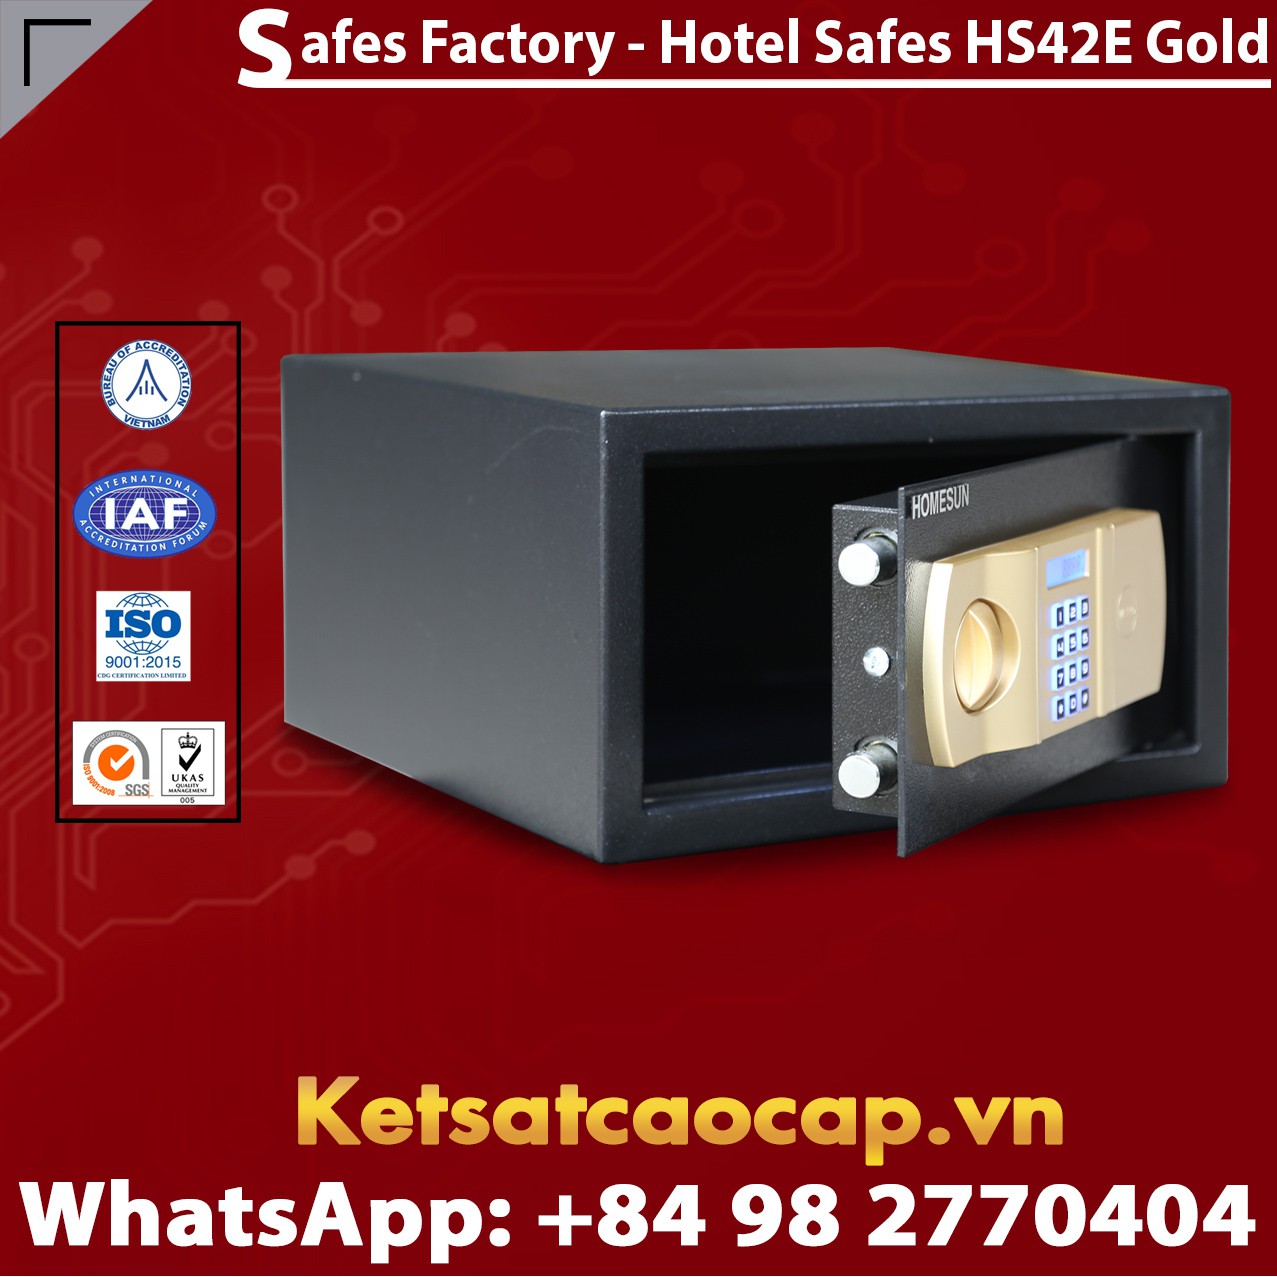 Best Hotel Safe For Home HOMESUN HS42 E Gold